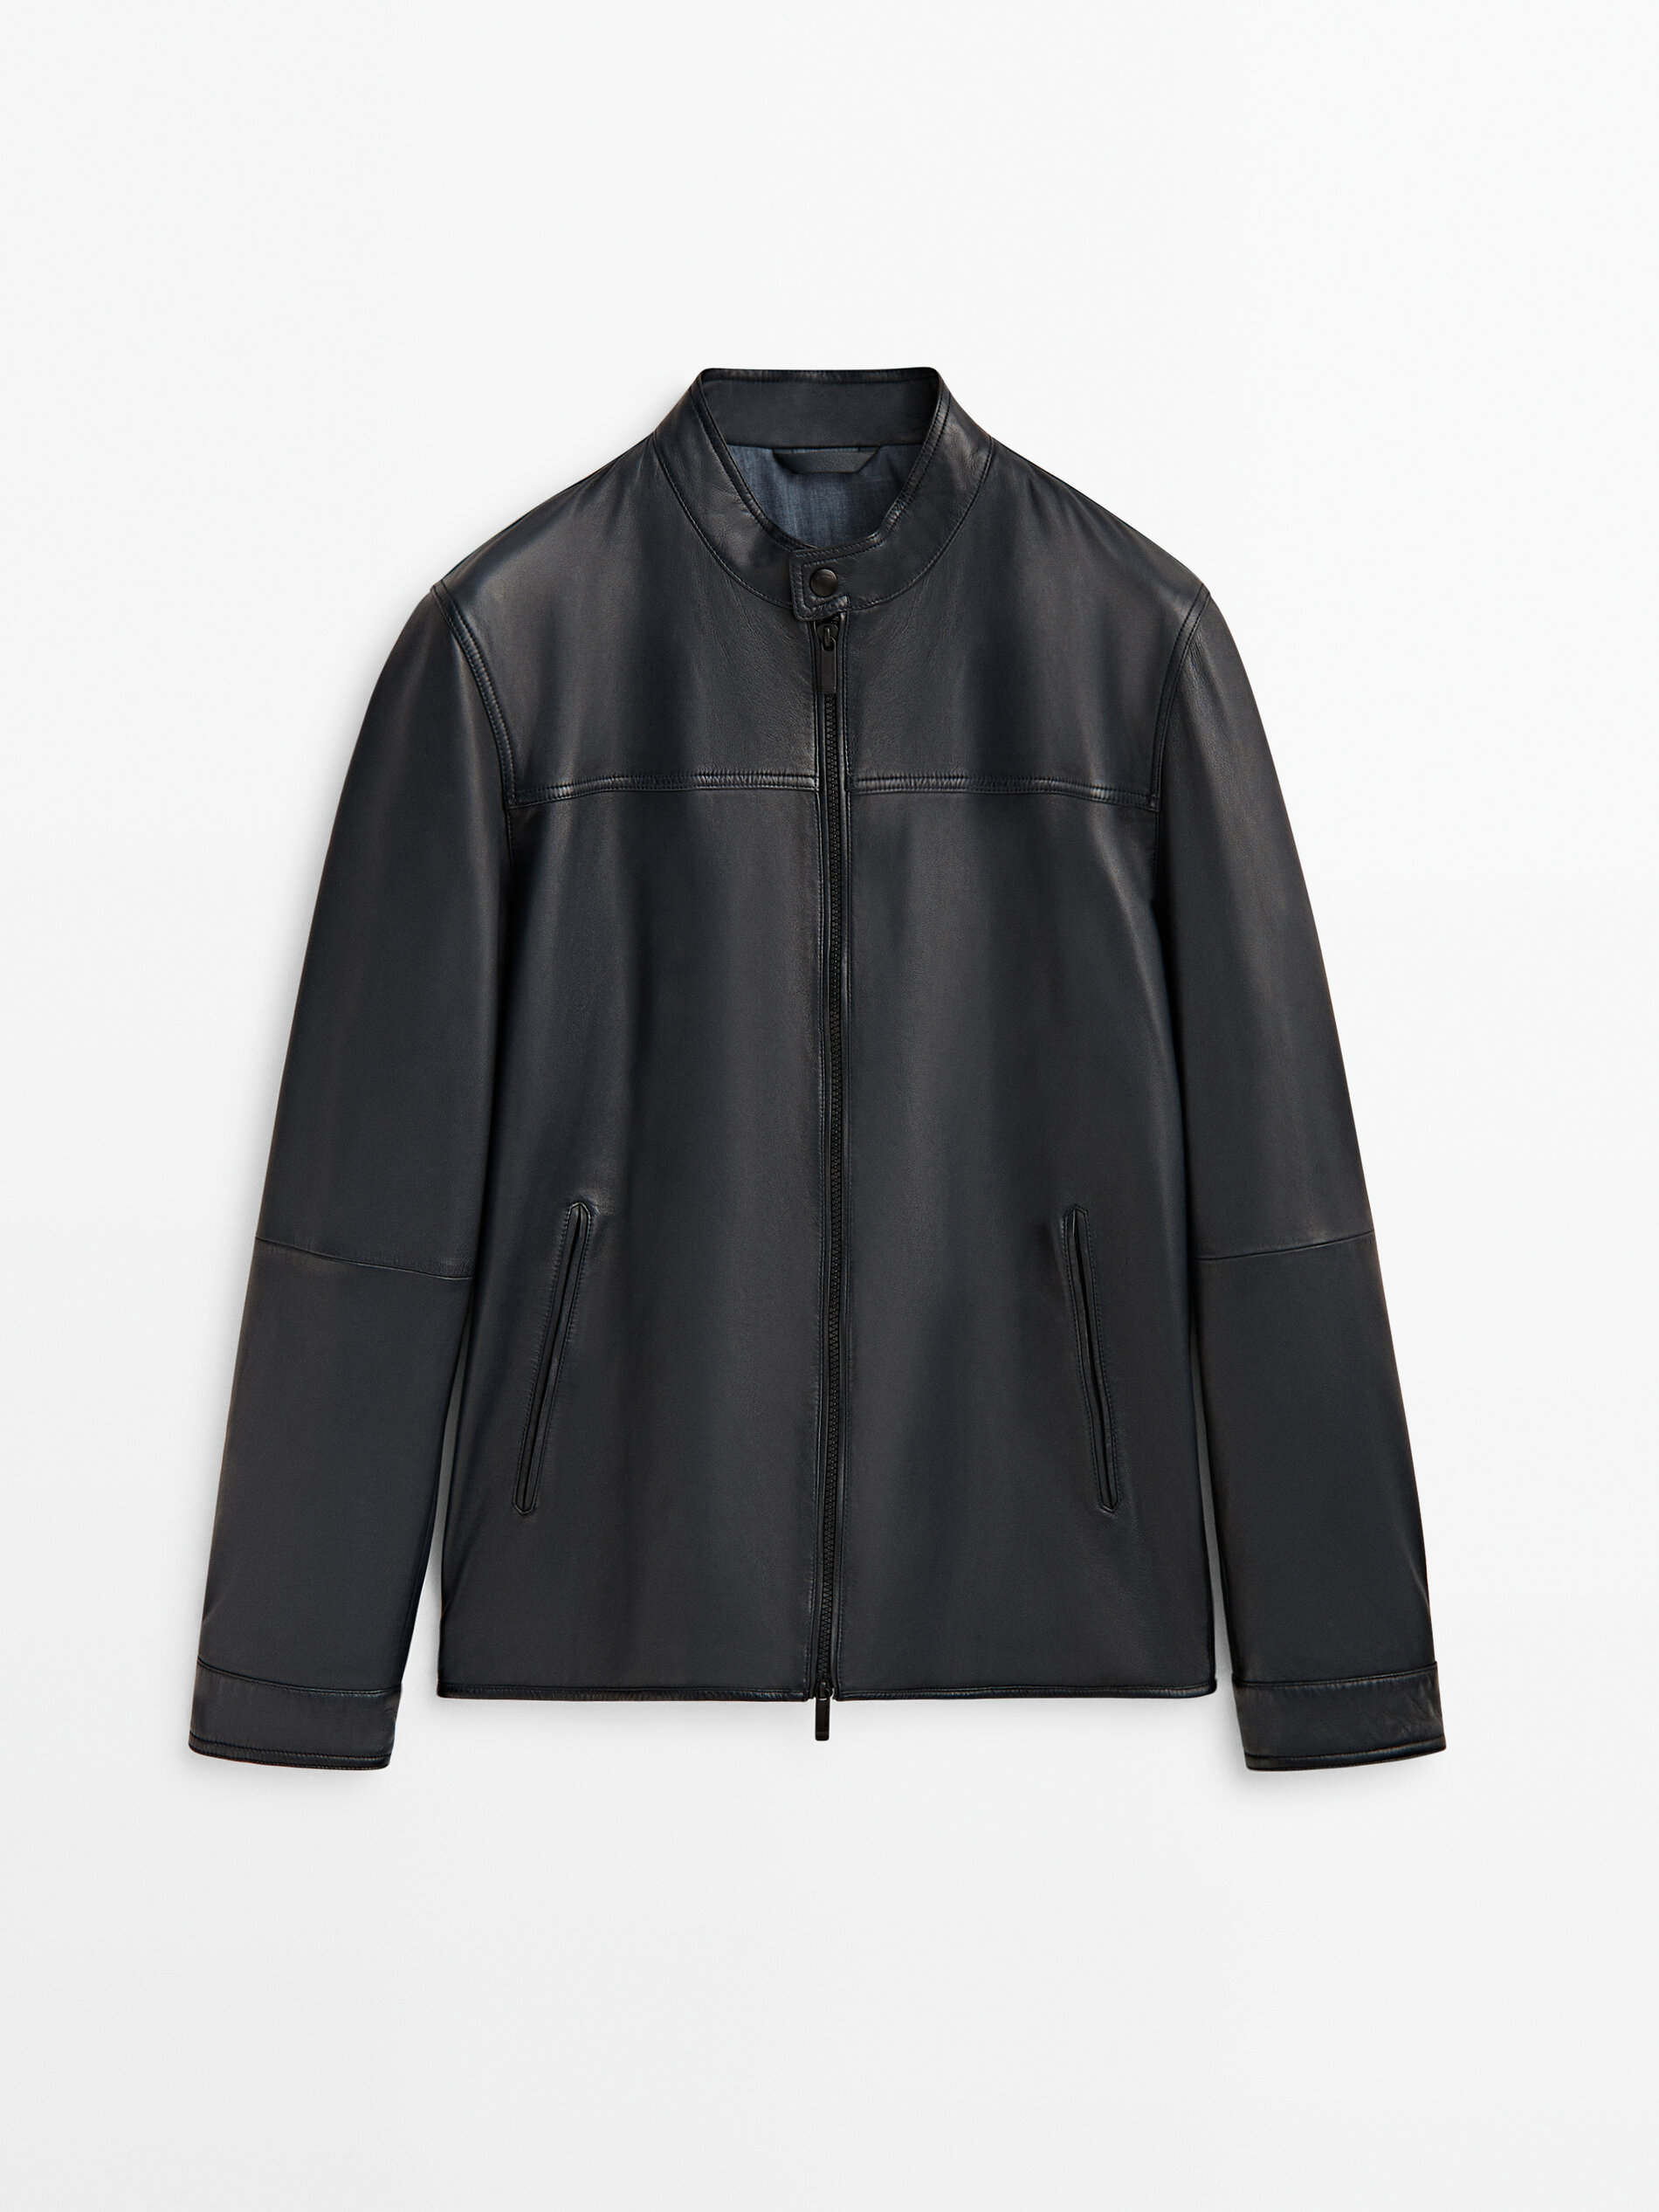 Blue nappa leather jacket - Massimo Dutti United States of America